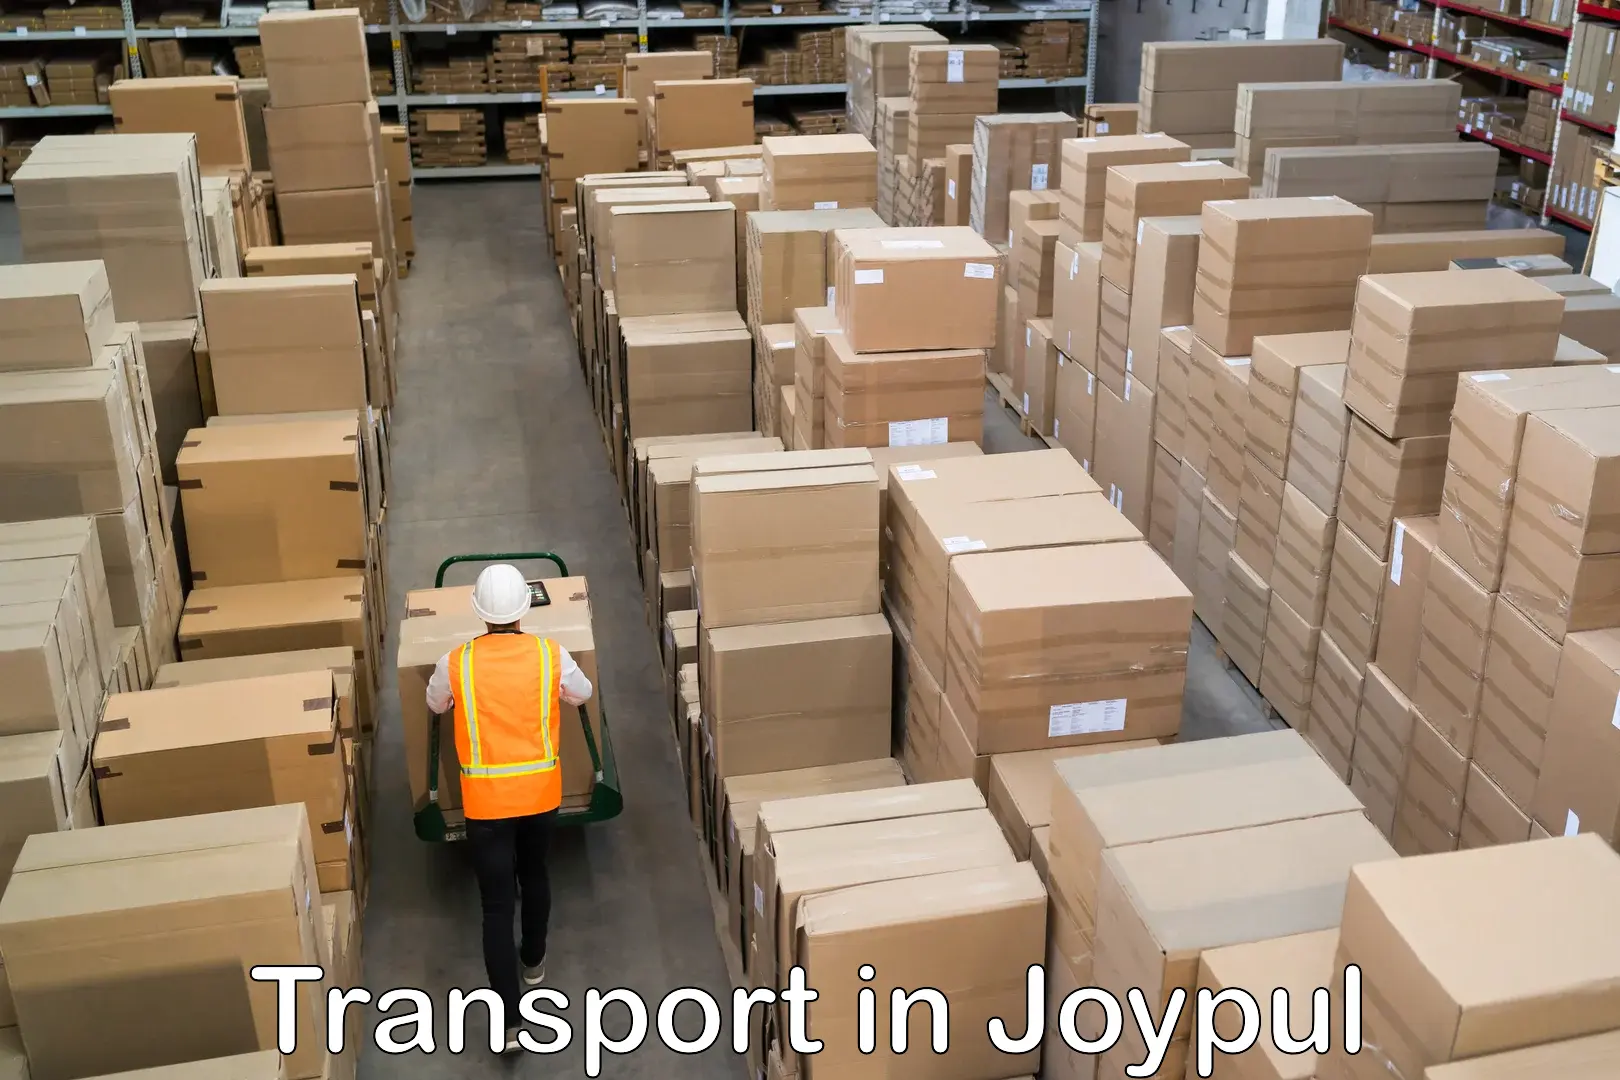 Online transport in Joypul